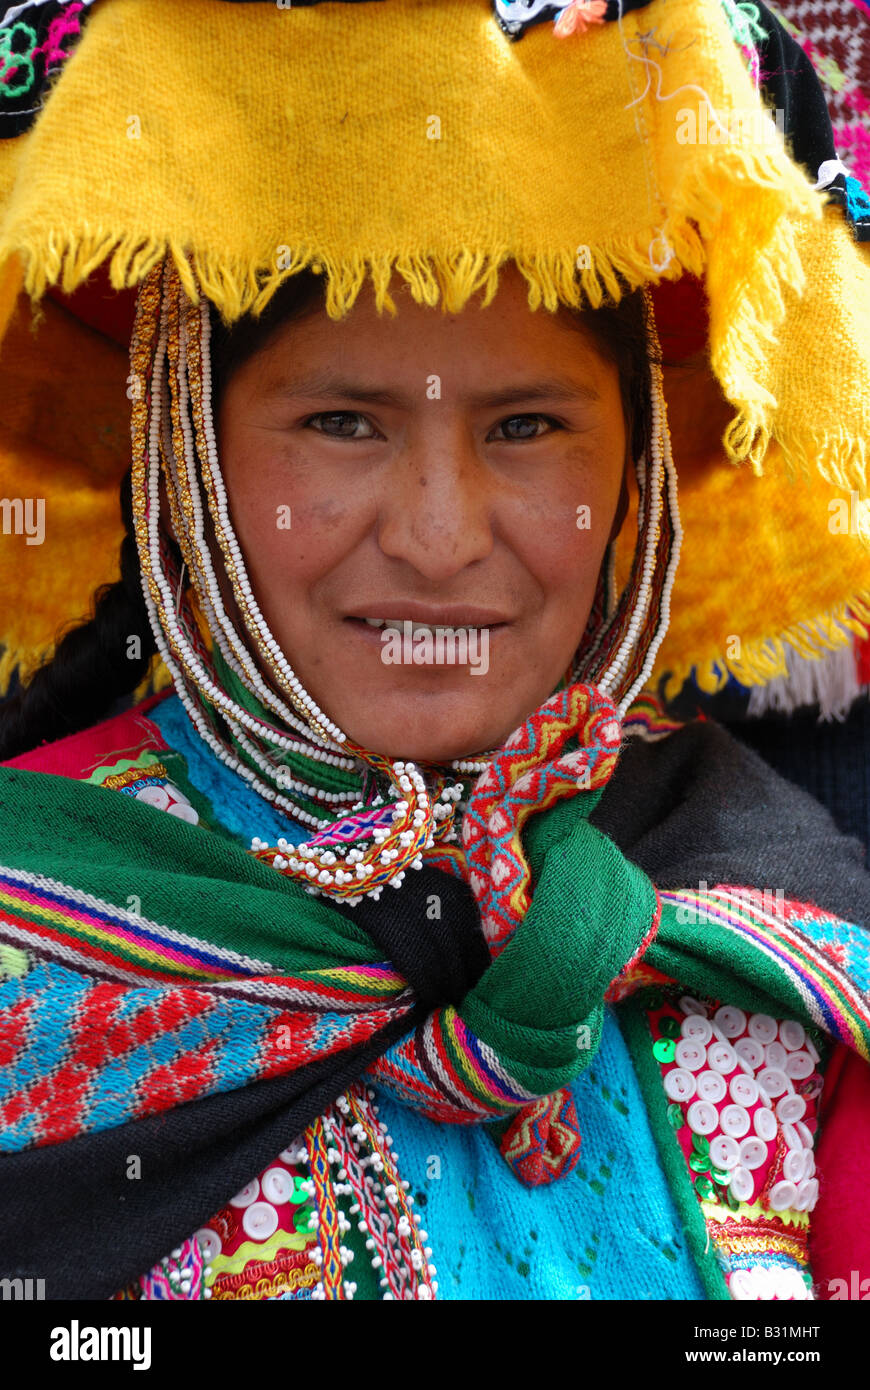 Peru, Indigenous Peruvian woman at Cuzco festival Stock Photo - Alamy